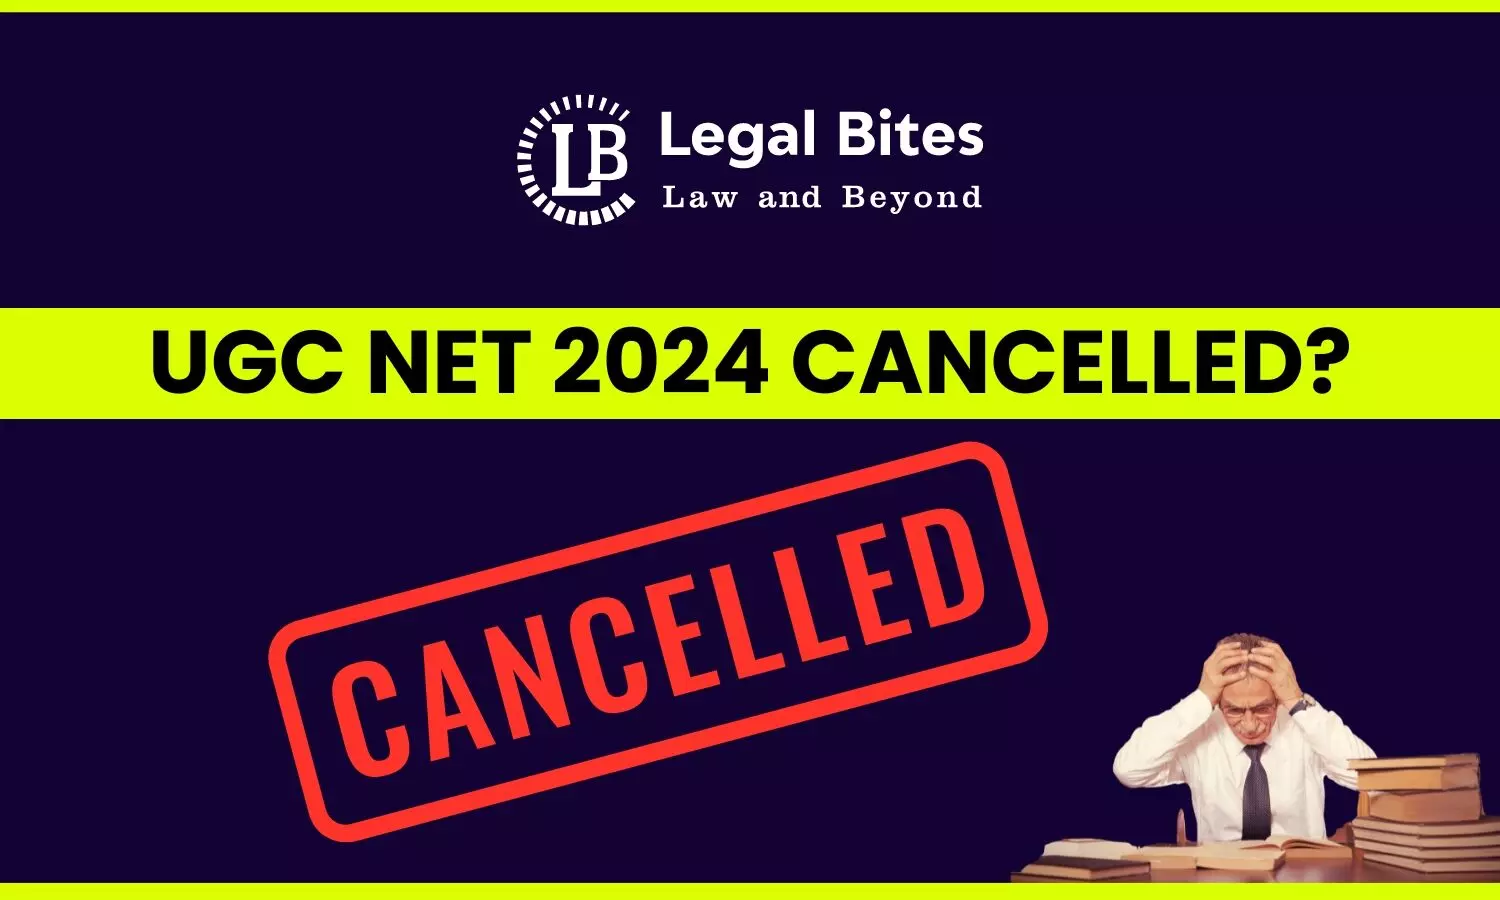 Cancellation of UGC NET June 2024 Examination